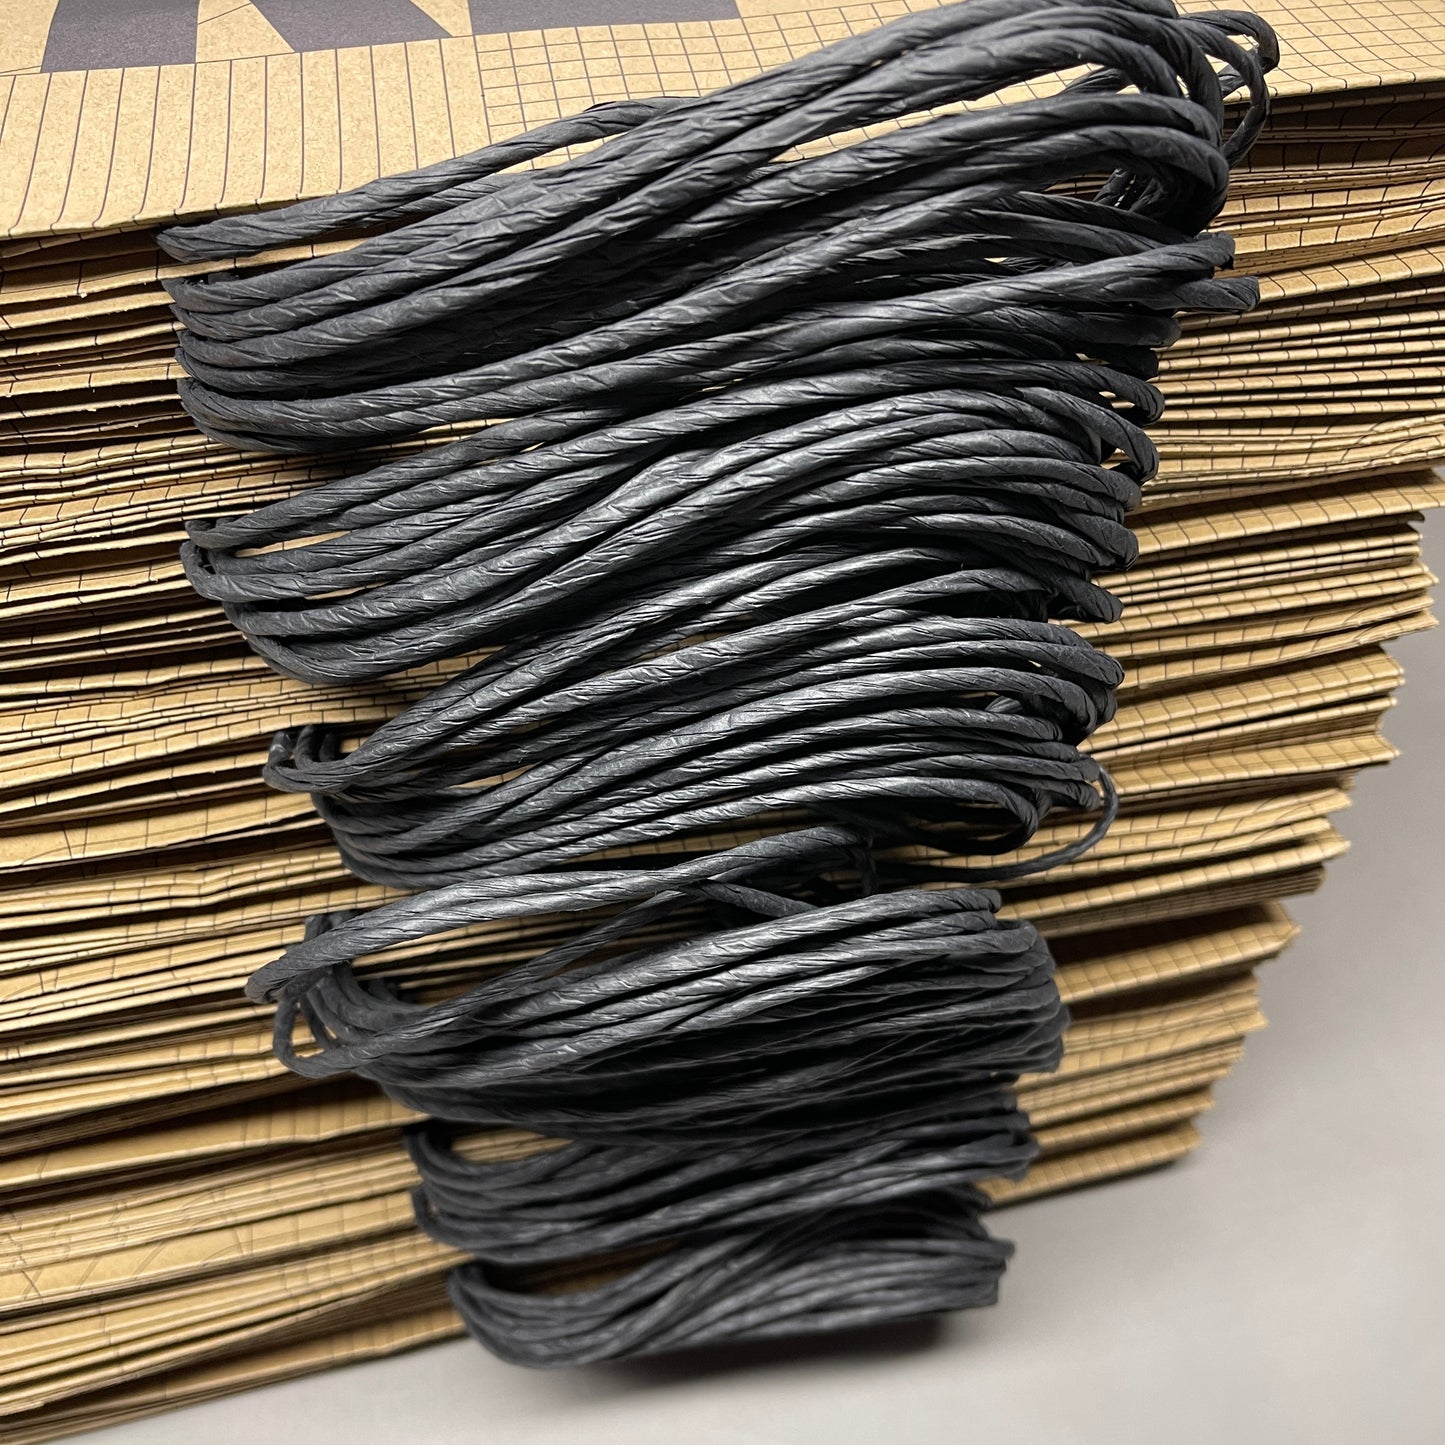 NIKE Paper Shopping Bags 150-Pack! Sz M 16” x 13” x 5” (New)